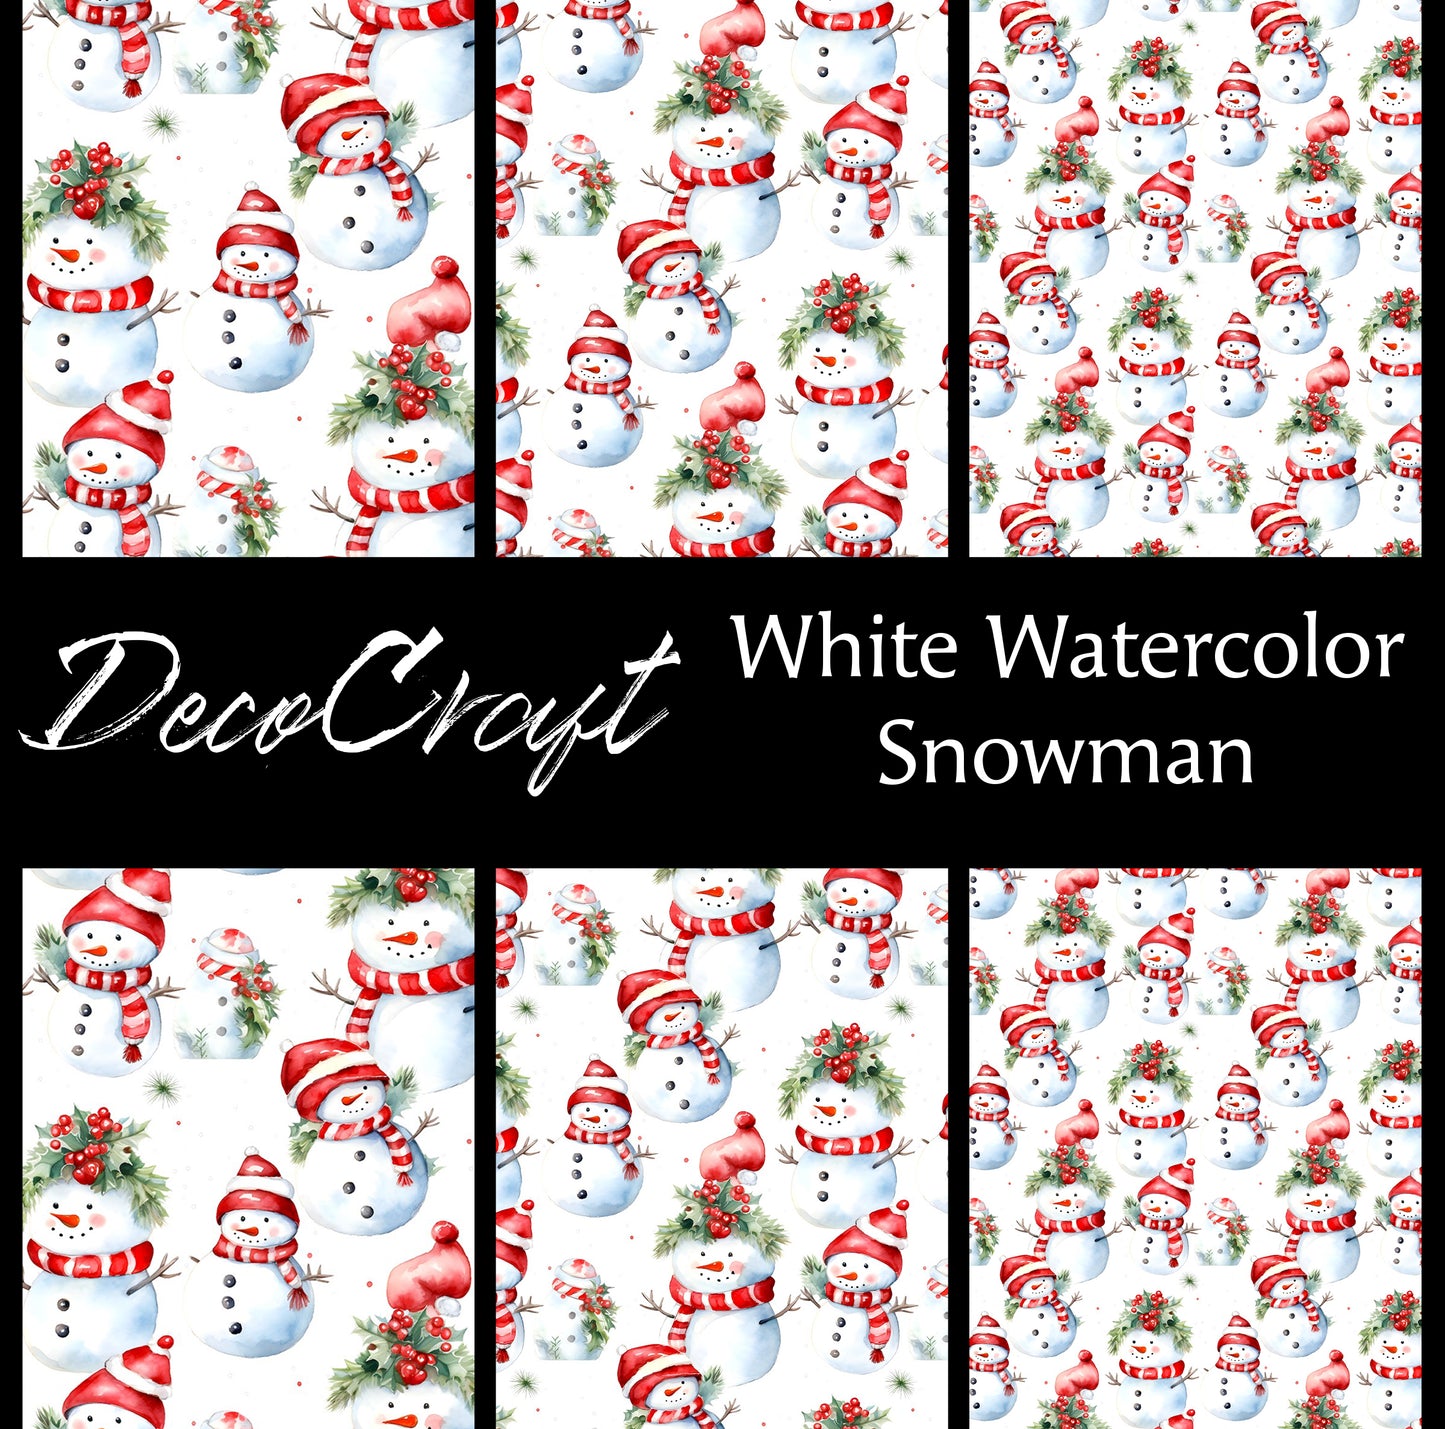 DecoCraft Christmas - Snowman - White Watercolor Snowman